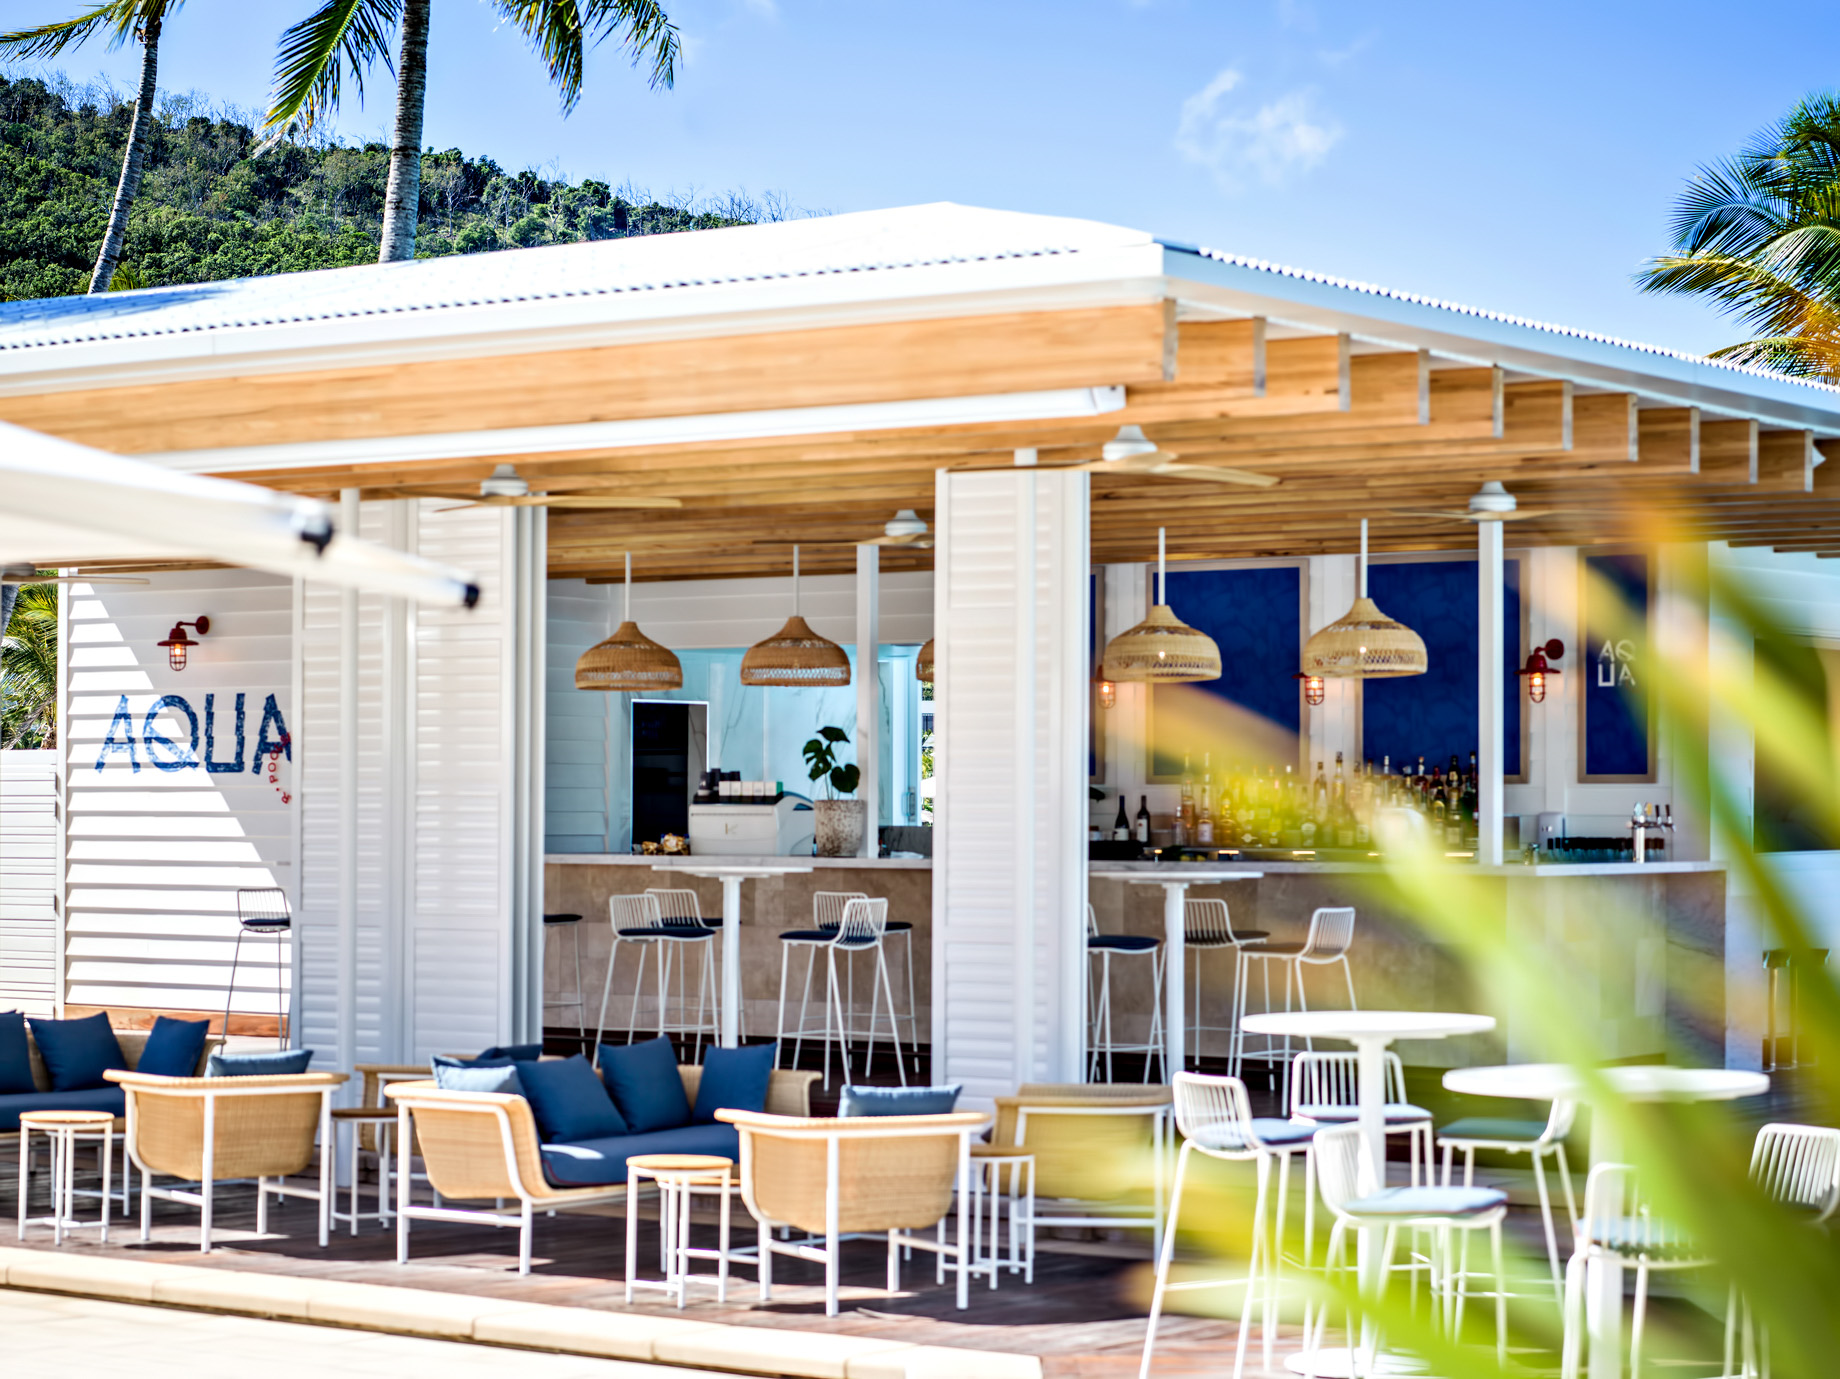 InterContinental Hayman Island Resort – Whitsunday Islands, Australia – Aqua Restaurant